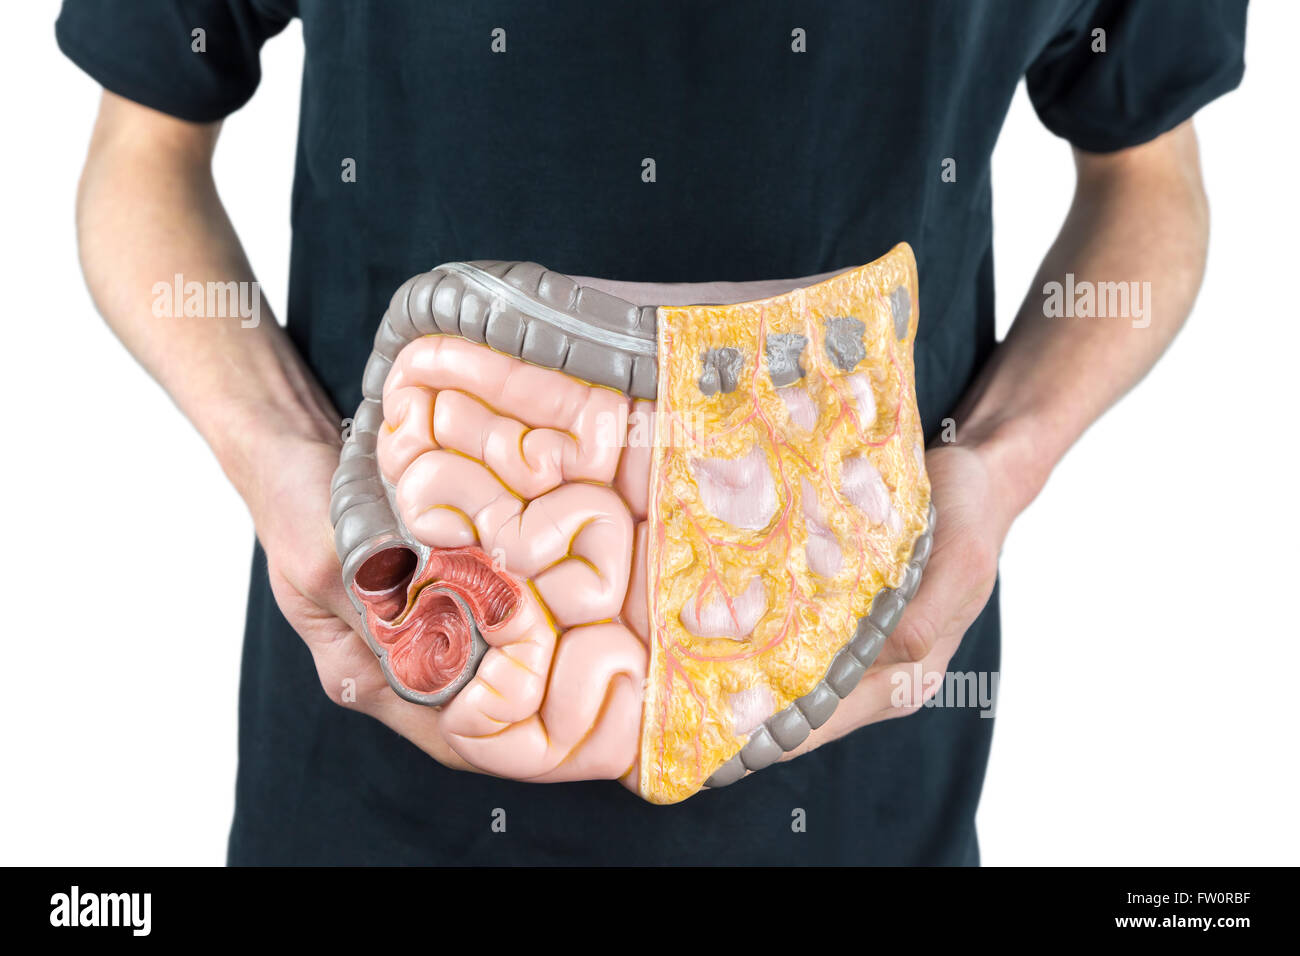 Man holding model of human intestines or bowels on black shirt isolated on white background Stock Photo